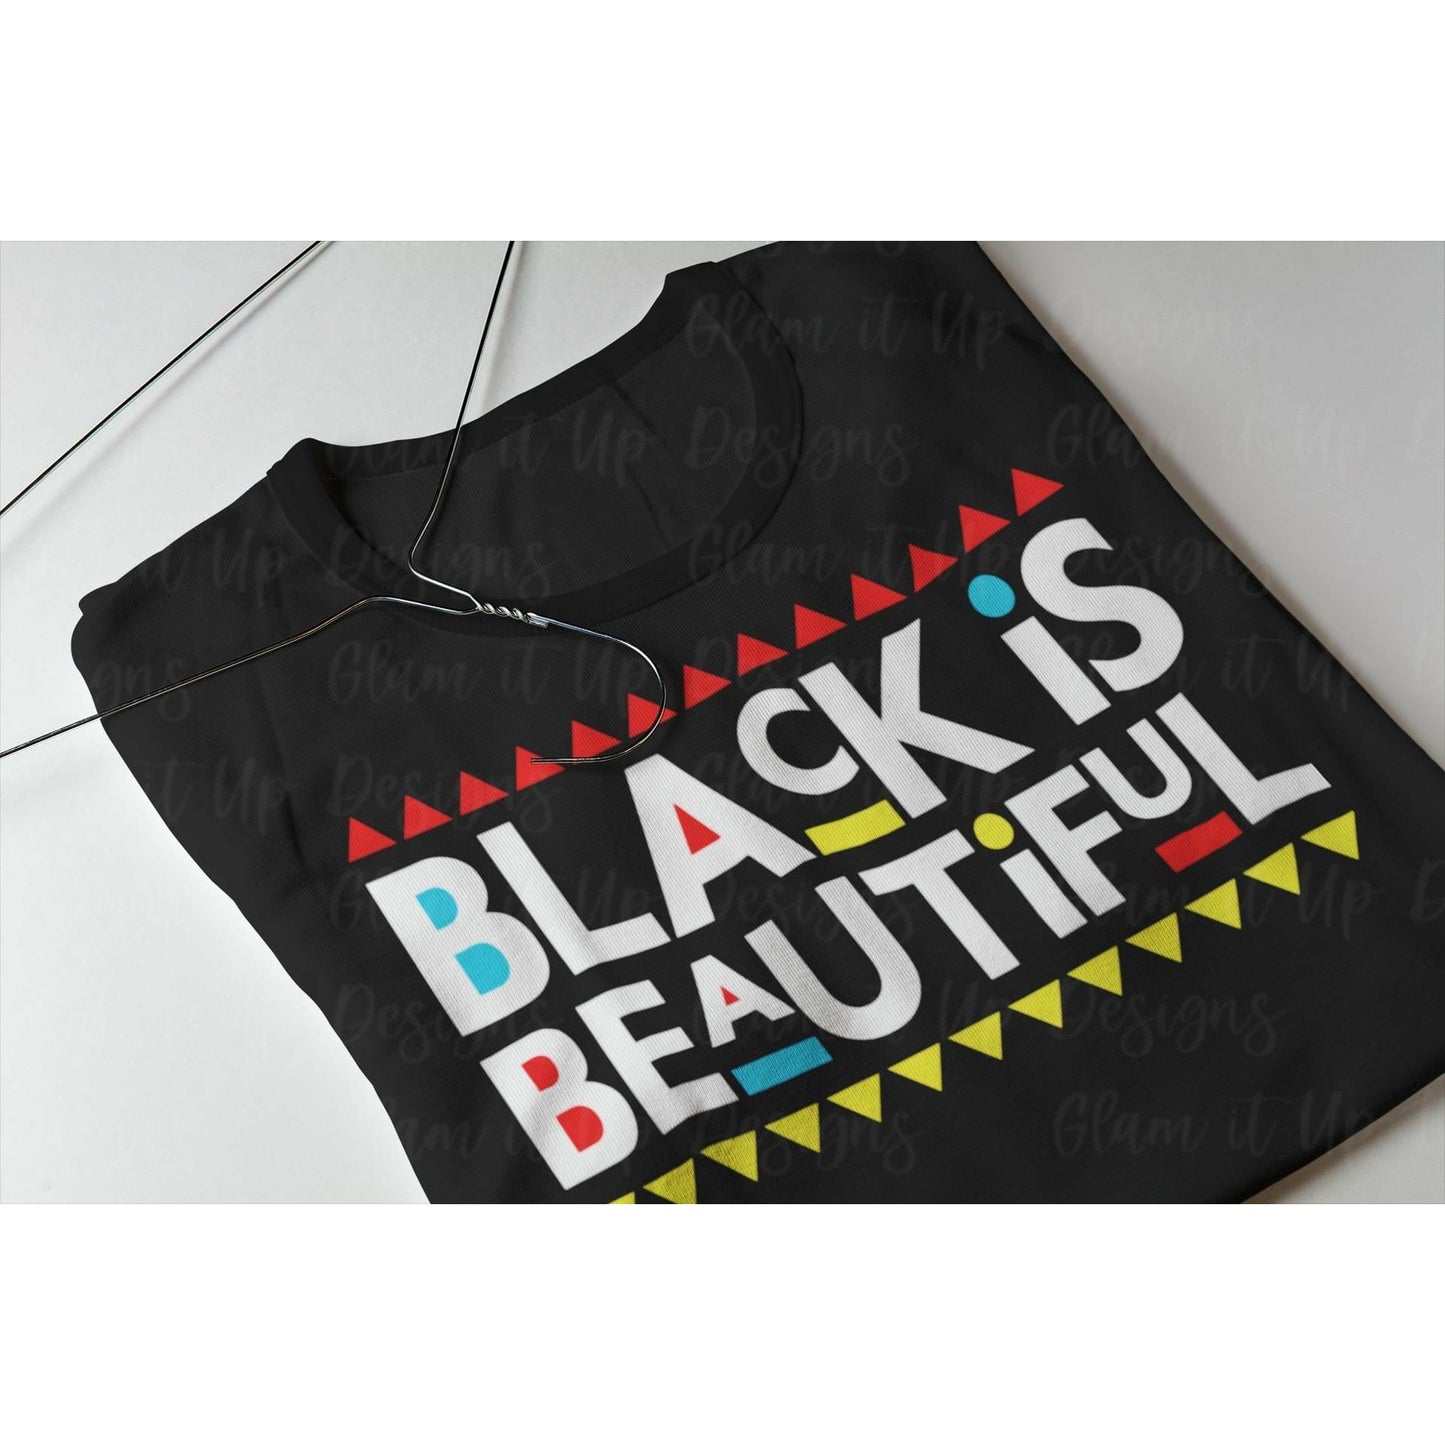 Black Is Beautiful T-shirt